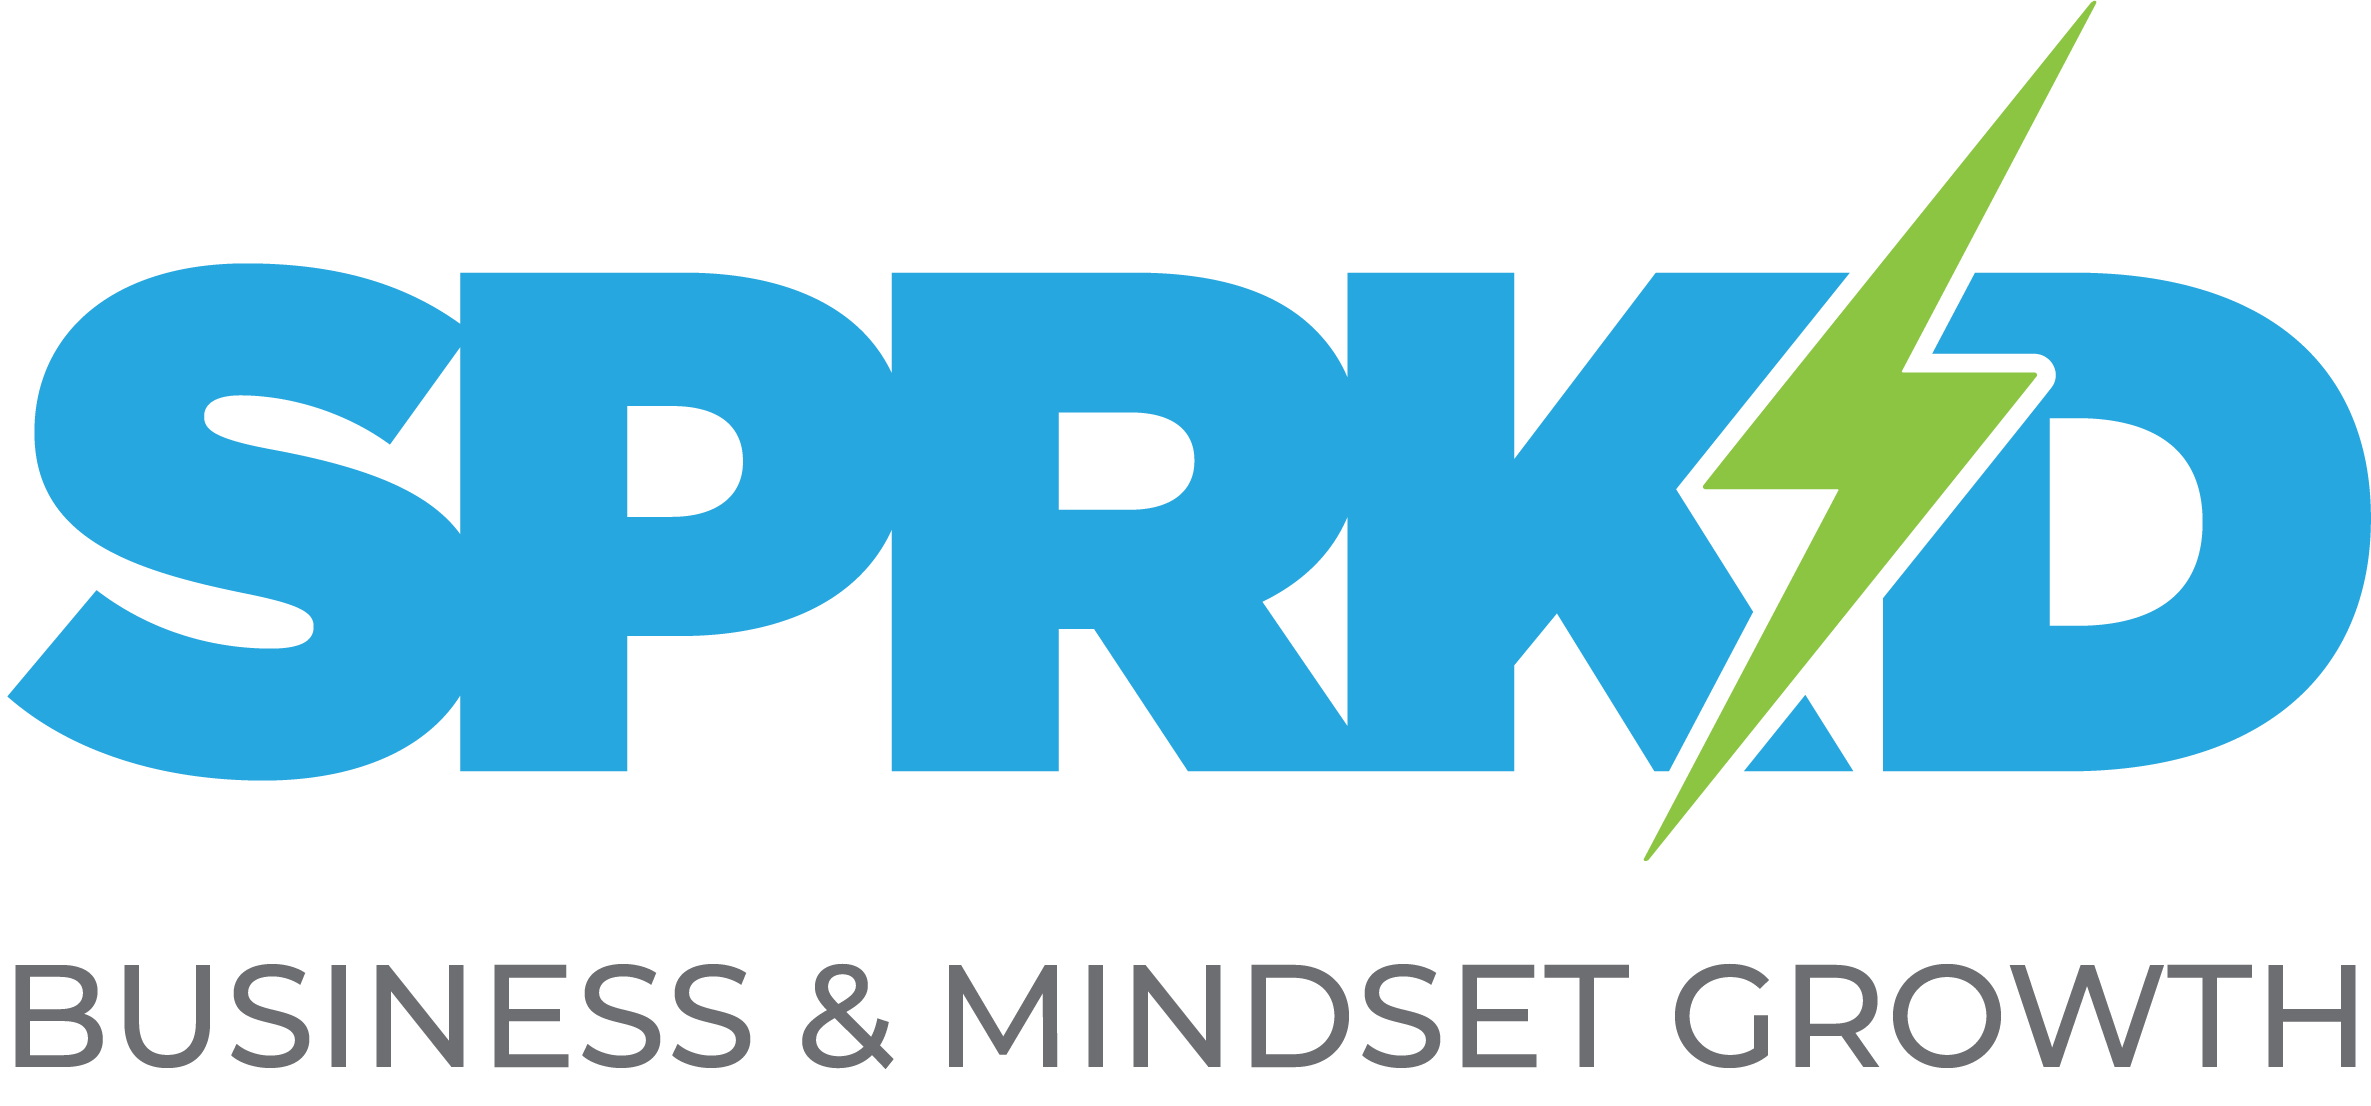 Sprk'd Business & Mindset Growth